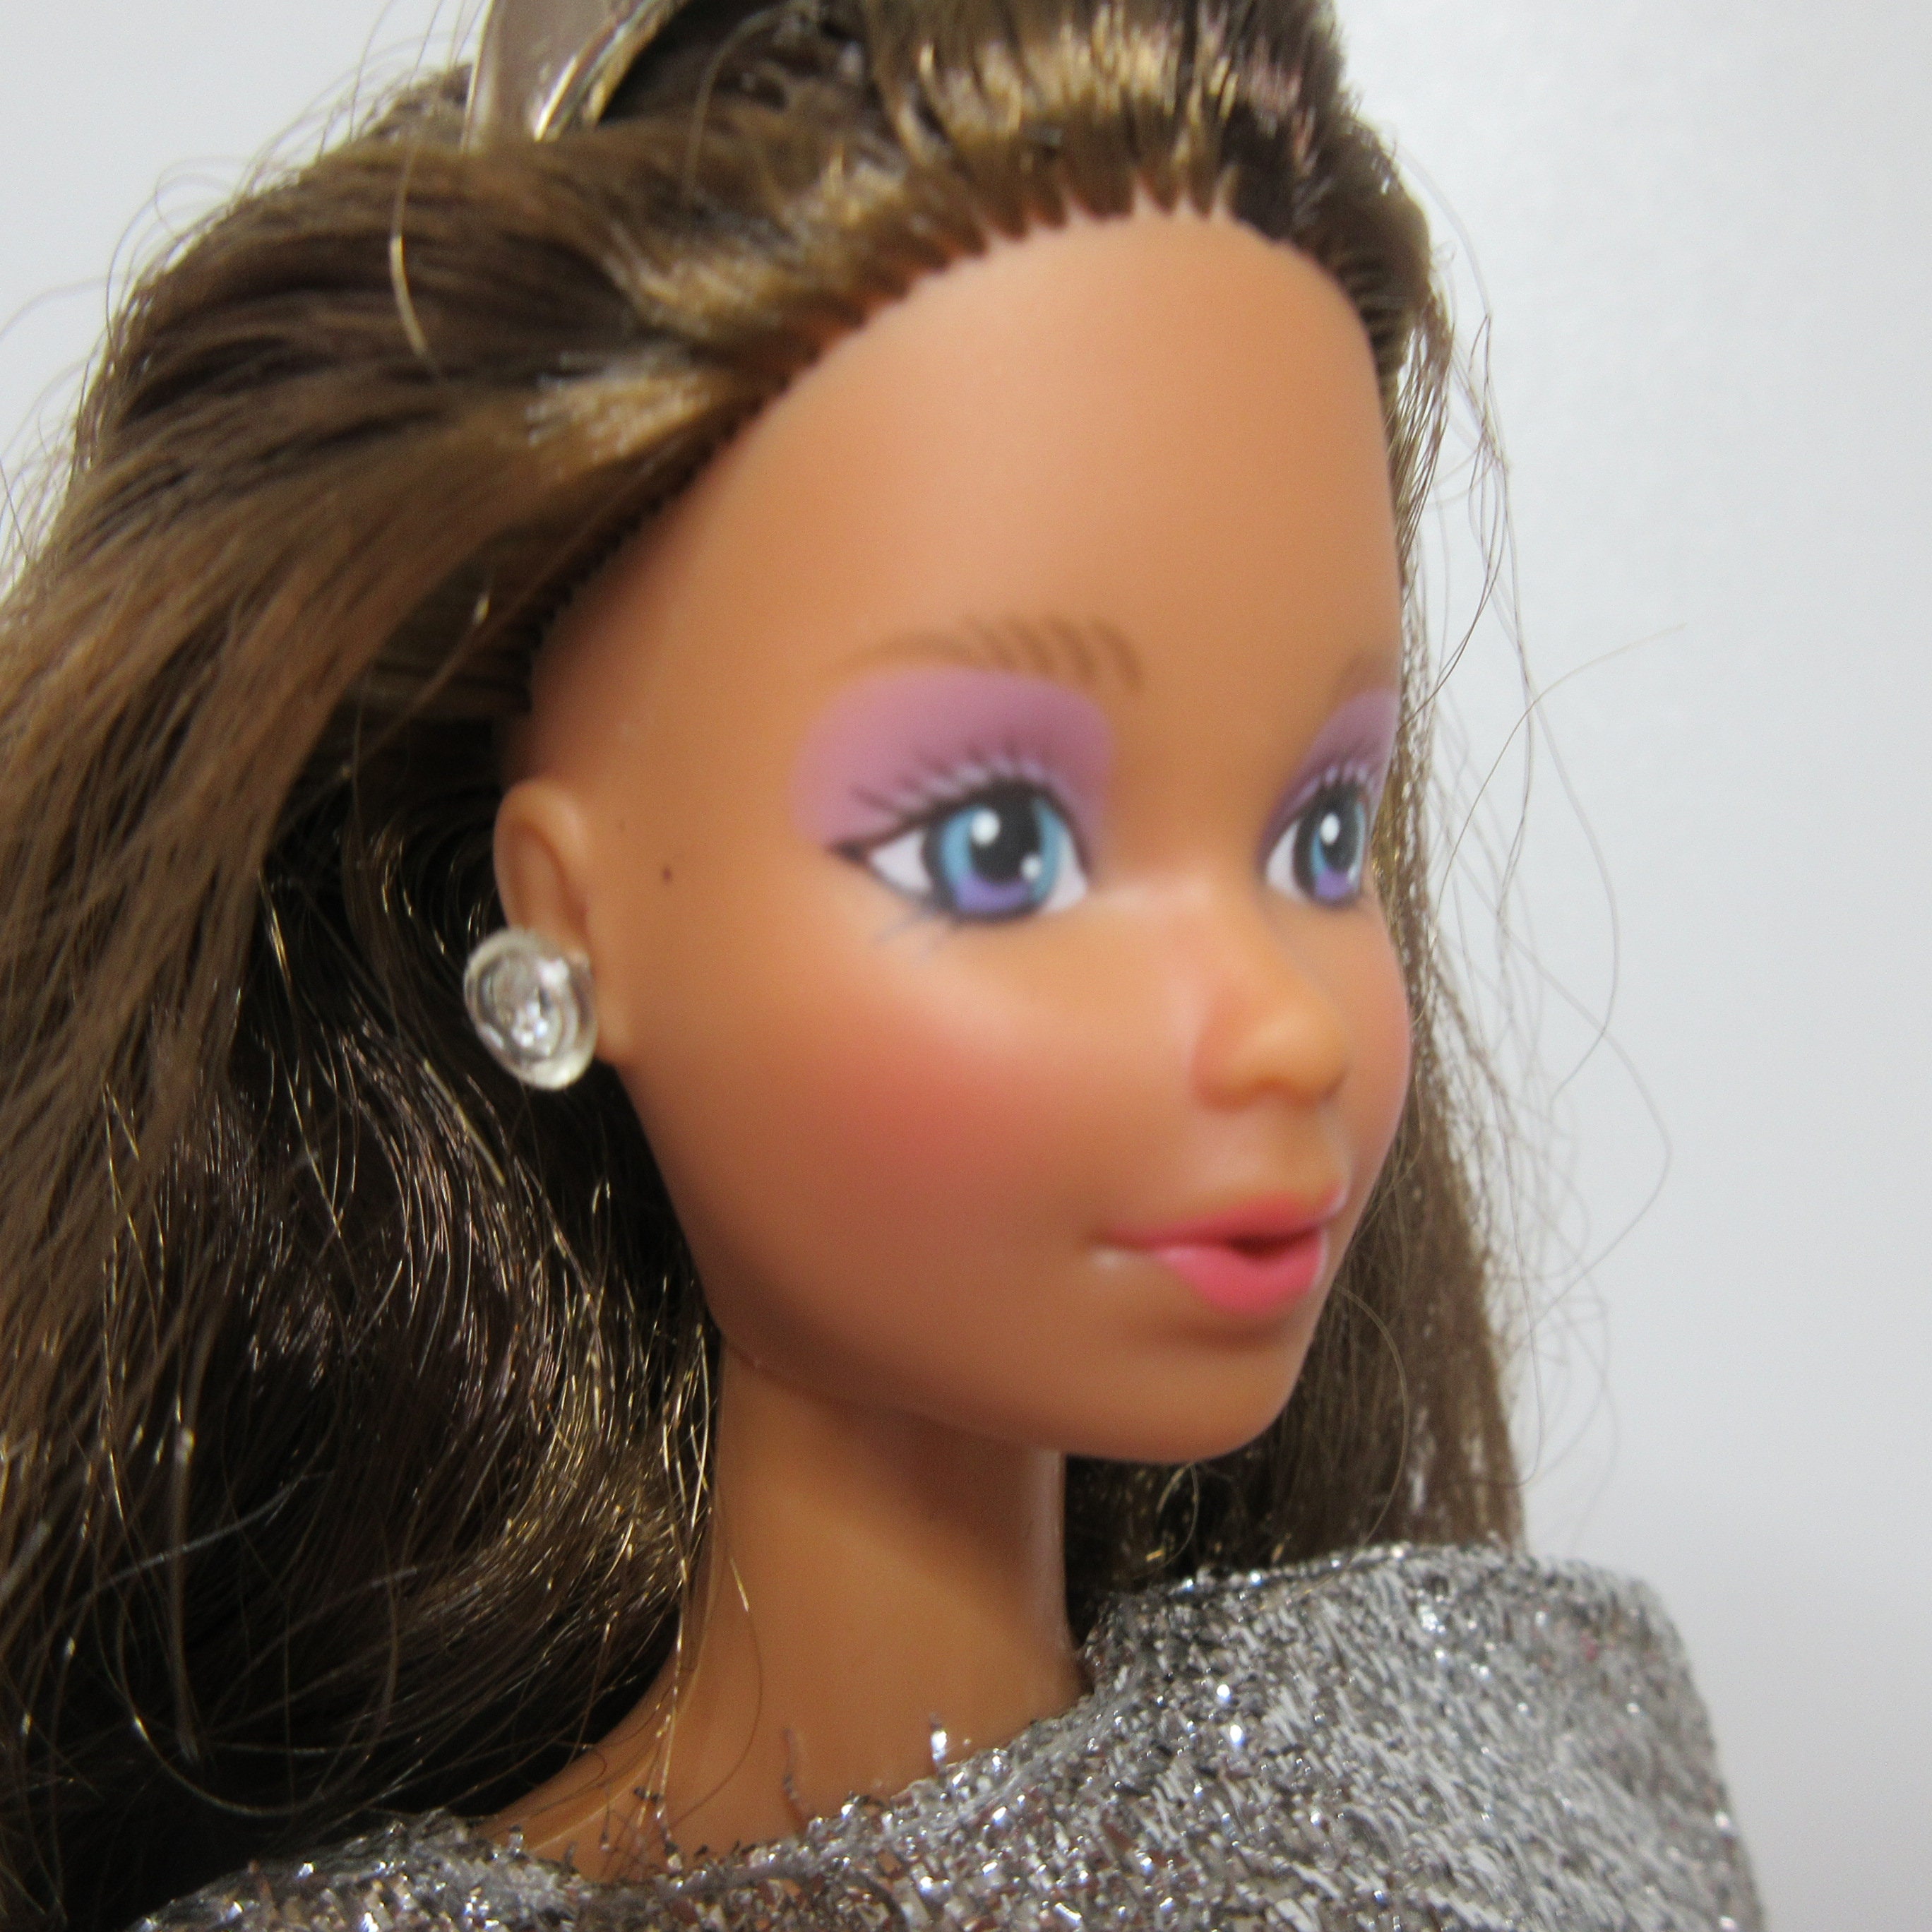 Barbie Jewel Secrets WHITNEY Doll 1986 Original Outfit Mint Mattel #3179